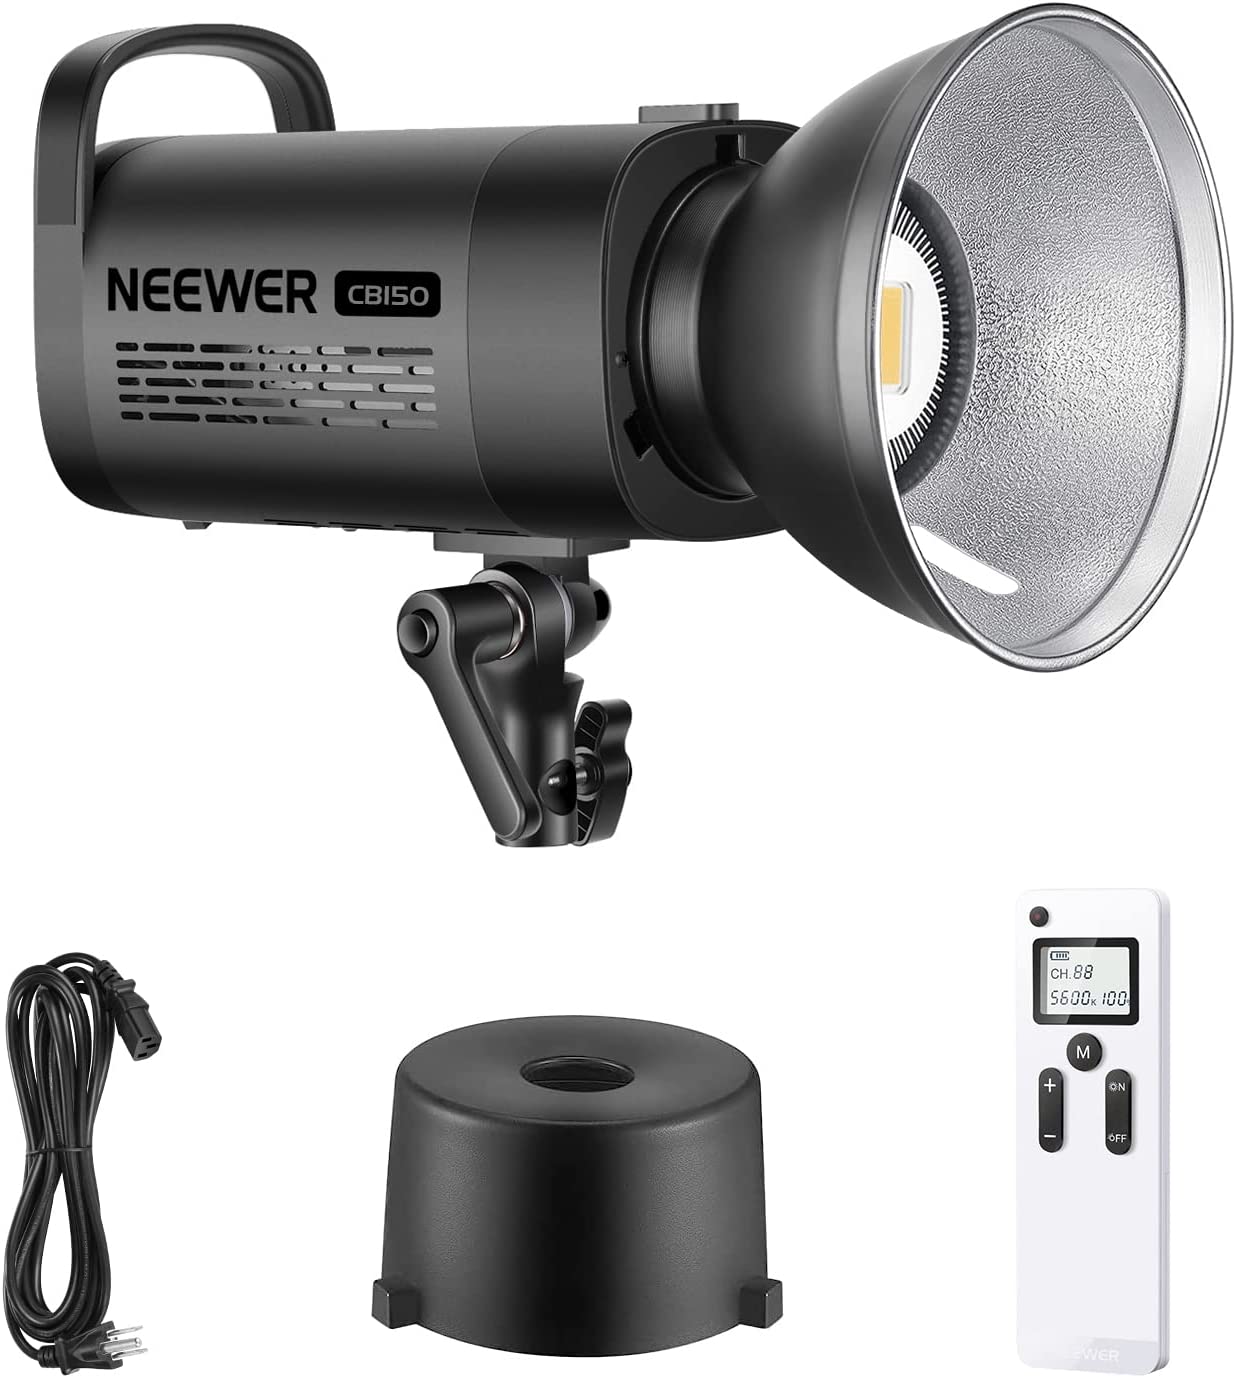 Cañon Luz LED Neewer CB150 150 W